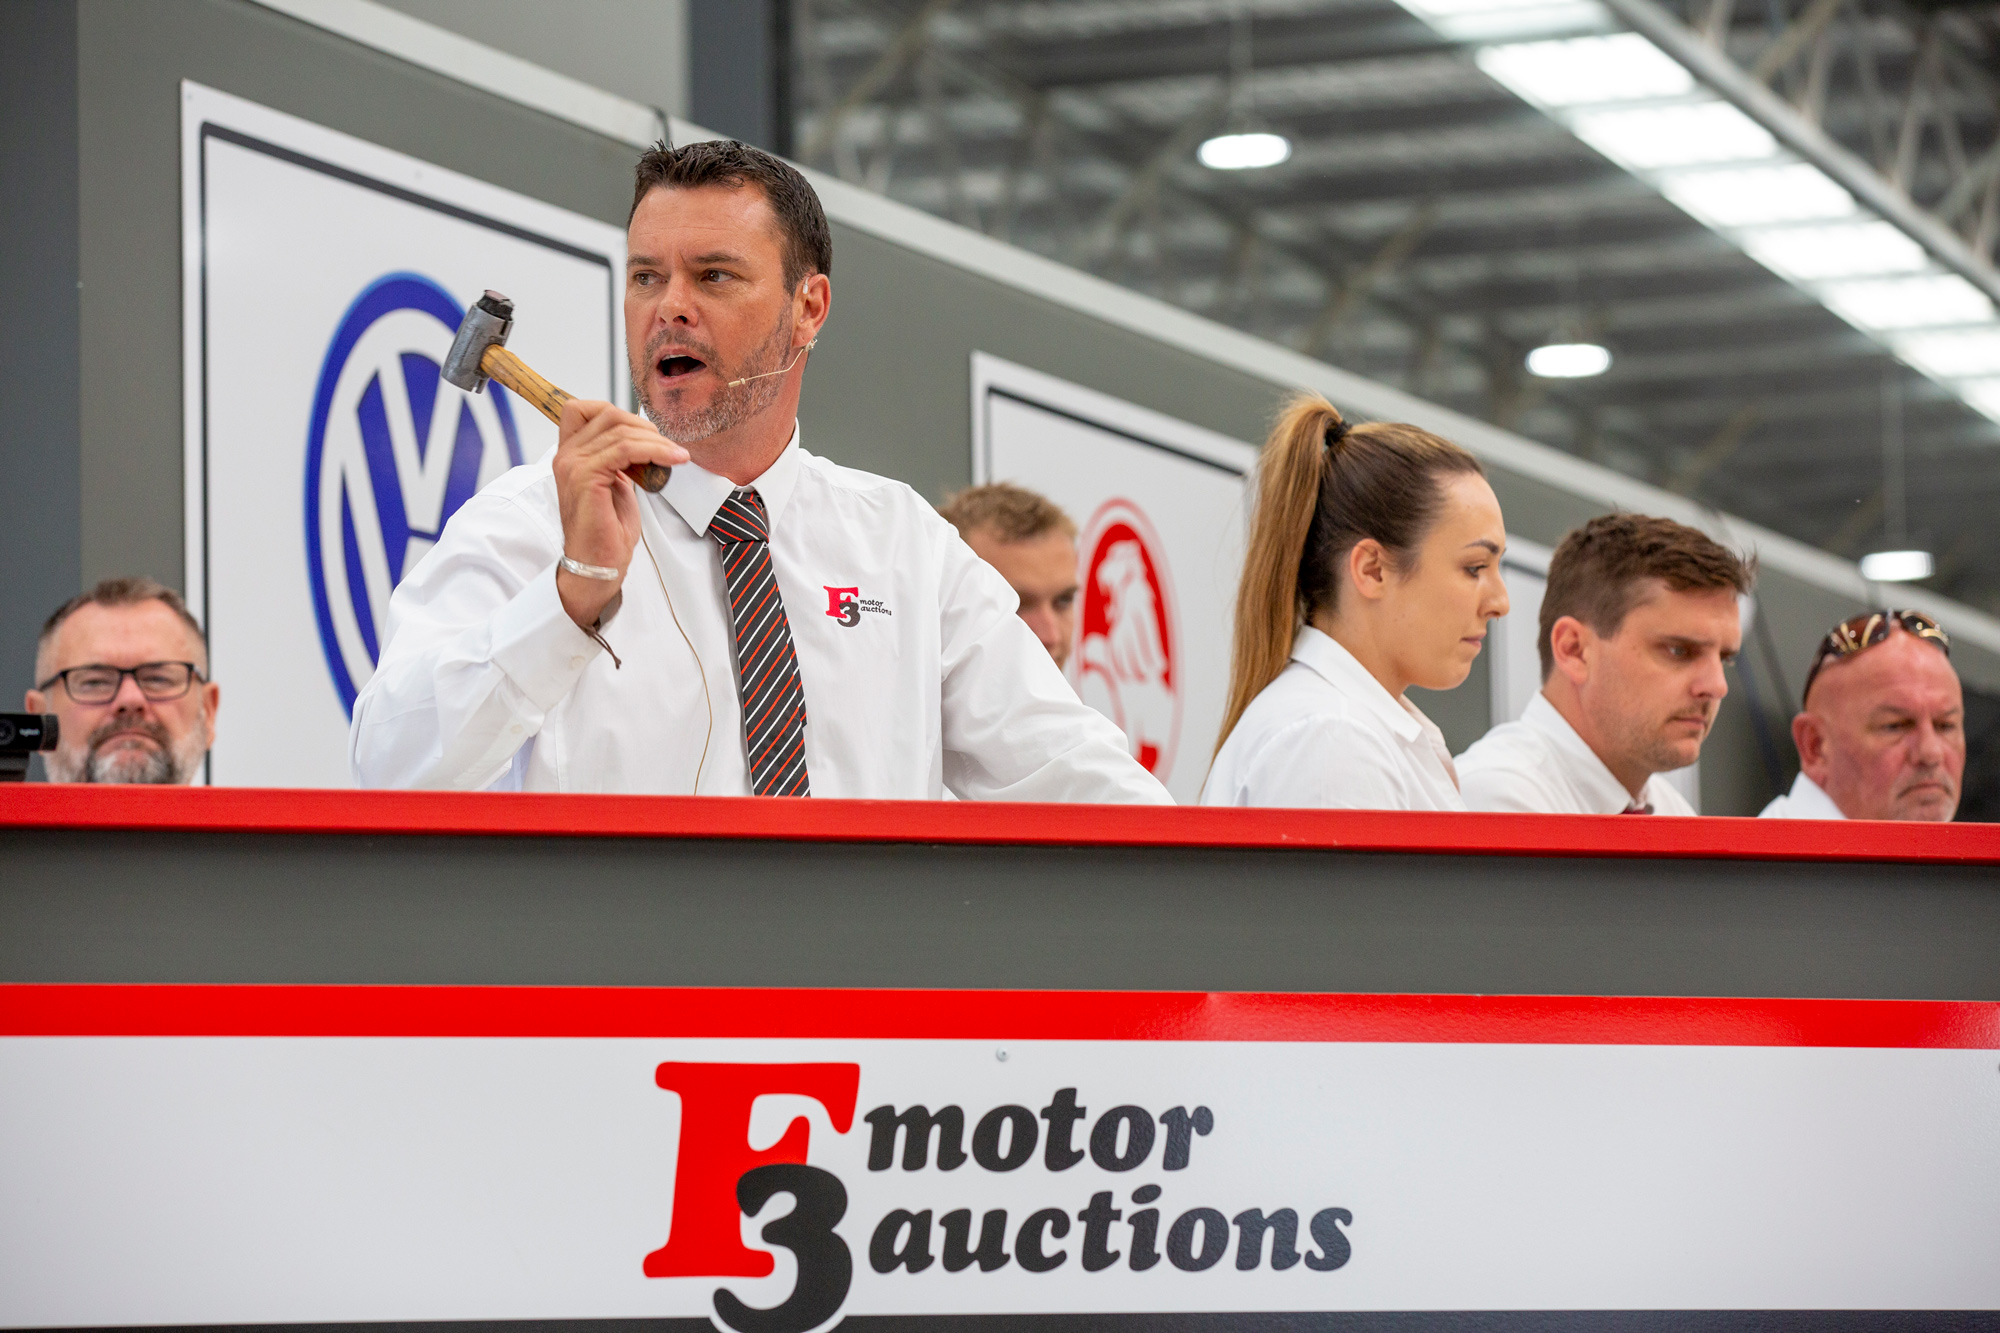 f3 motor auctions